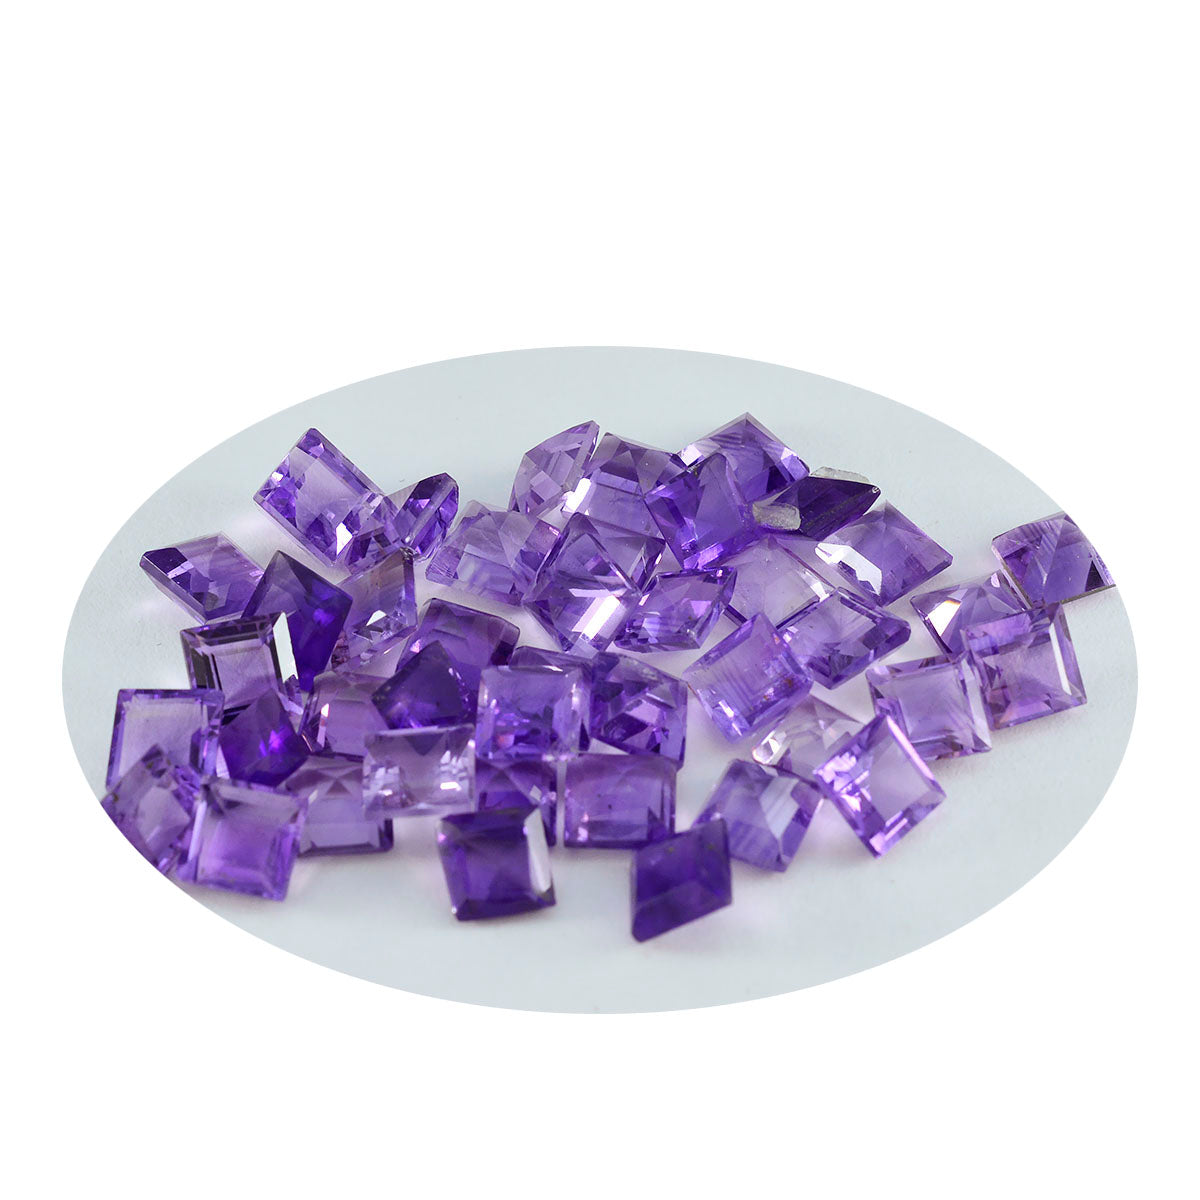 Riyogems 1PC Genuine Purple Amethyst Faceted 7X7 mm Square Shape Nice Quality Gem